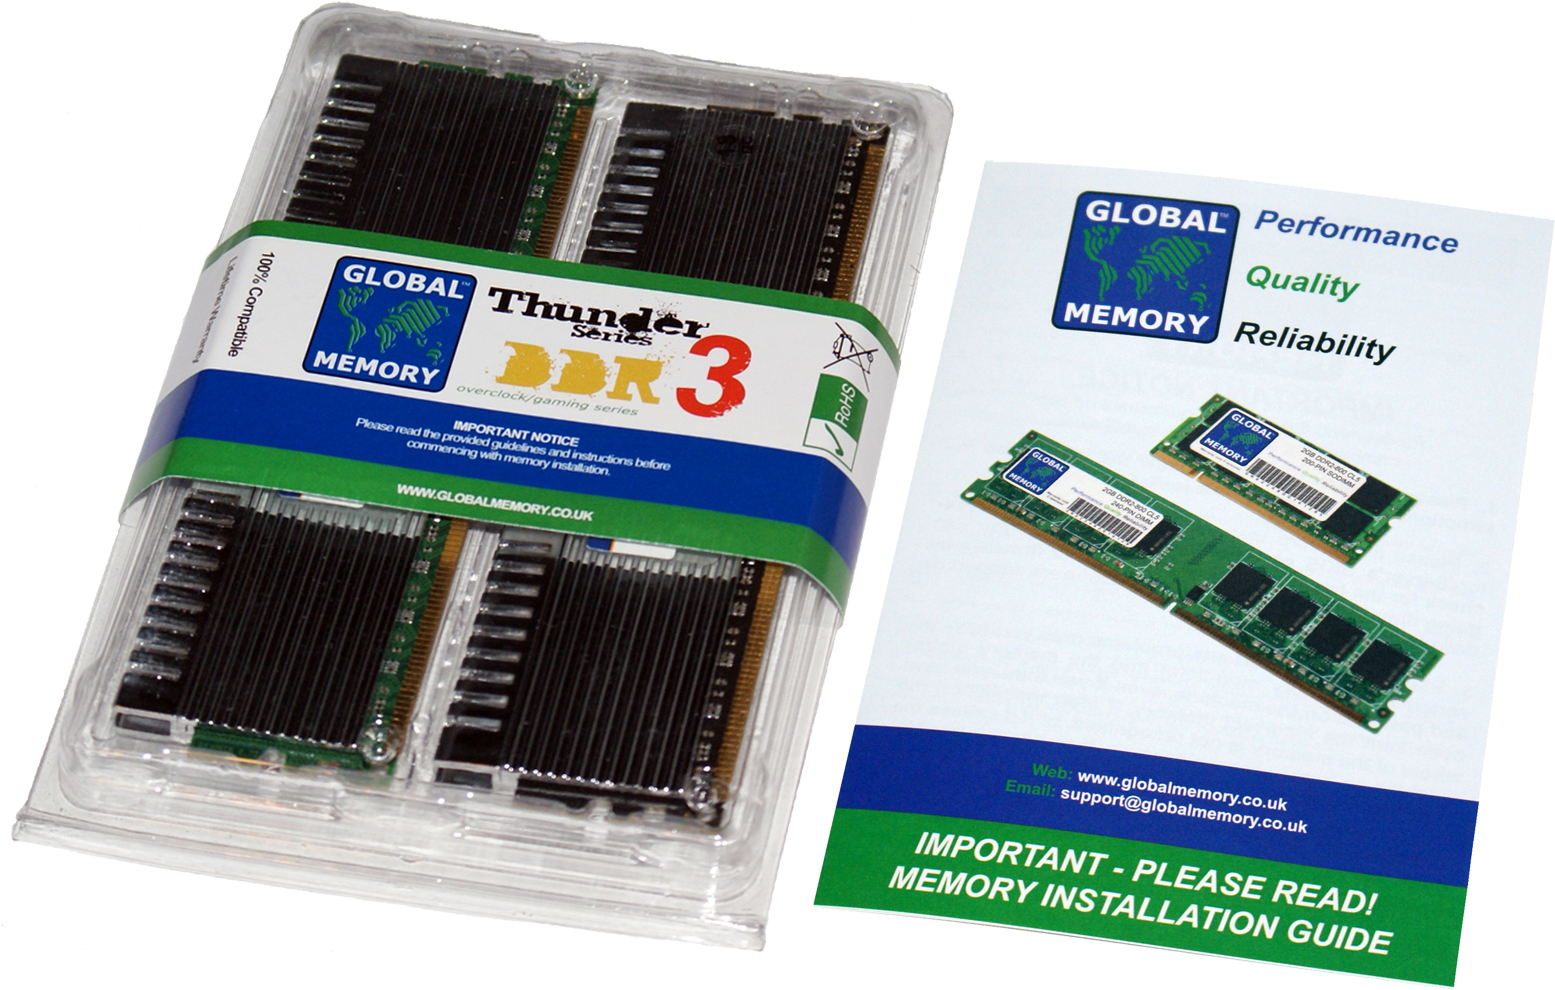 8GB (2 x 4GB) DDR3 2400MHz PC3-19200 240-PIN OVERCLOCK DIMM MEMORY RAM KIT FOR PC DESKTOPS/MOTHERBOARDS